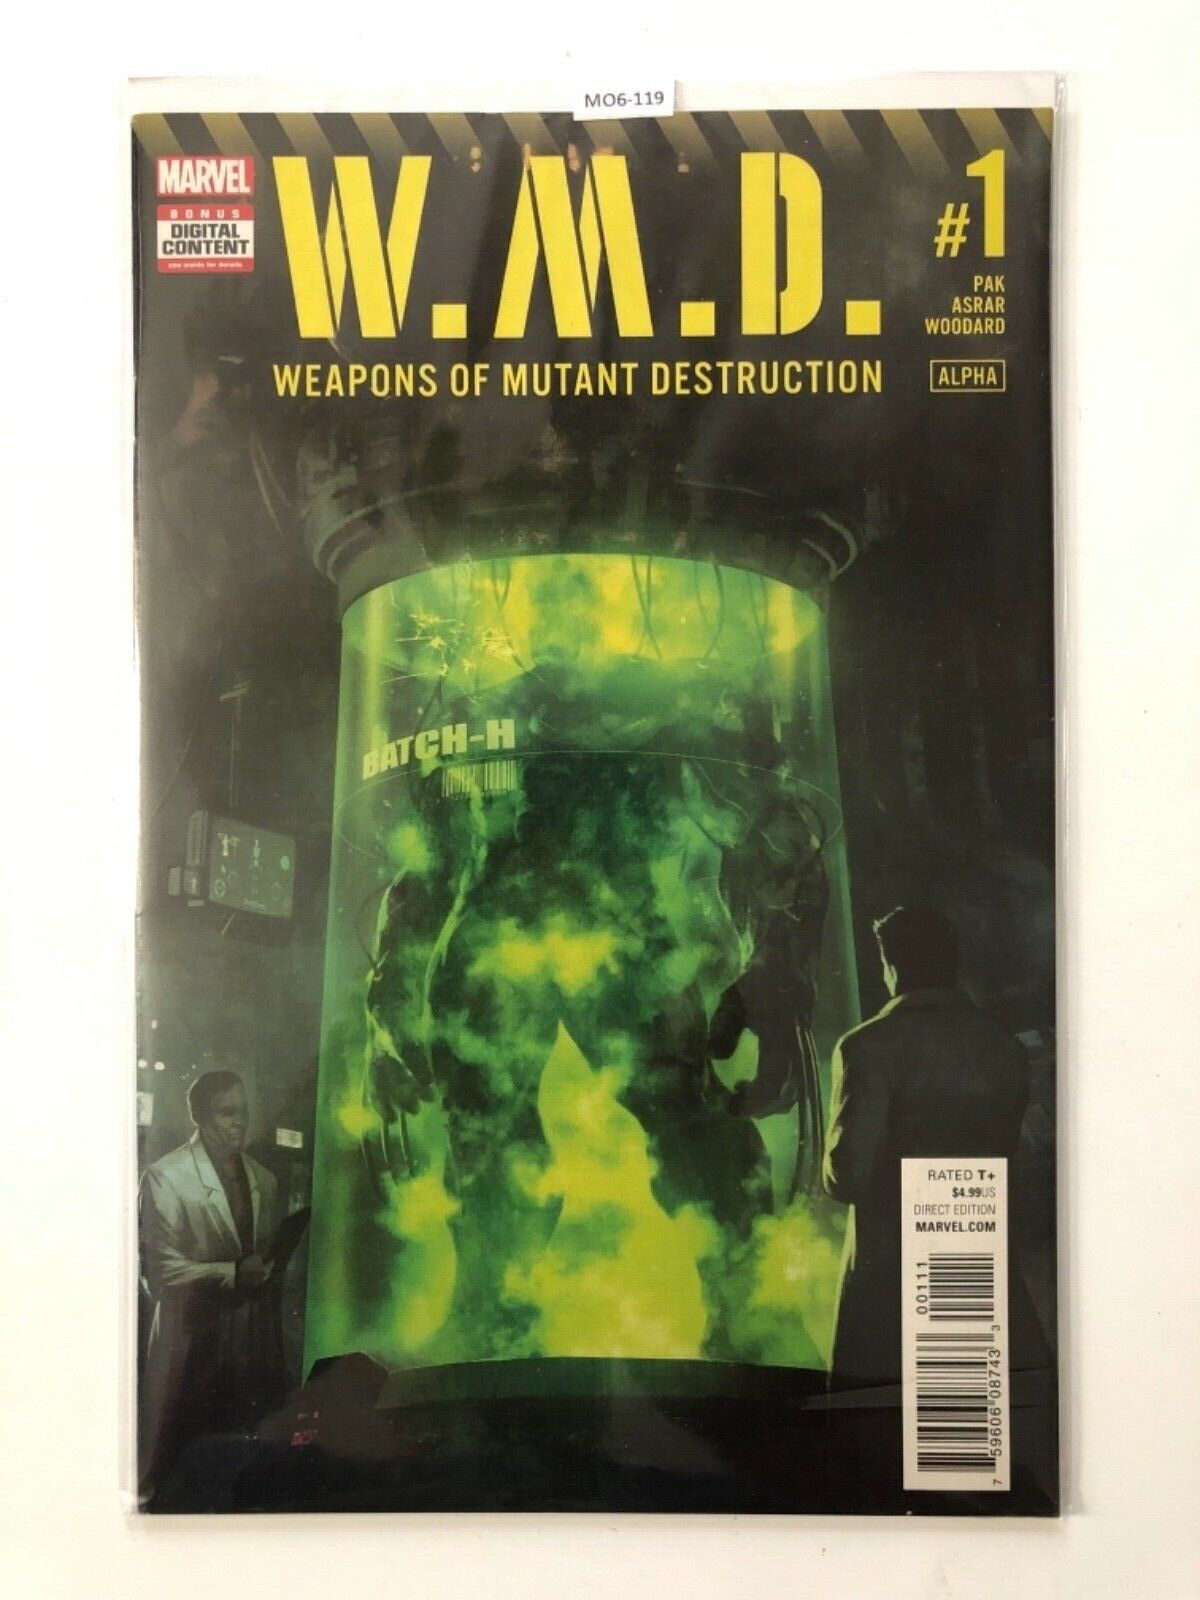 W.M.D. [Weapons of Mutant Destruction] #1 Alpha Marvel Comic Book *NM* MO6-119